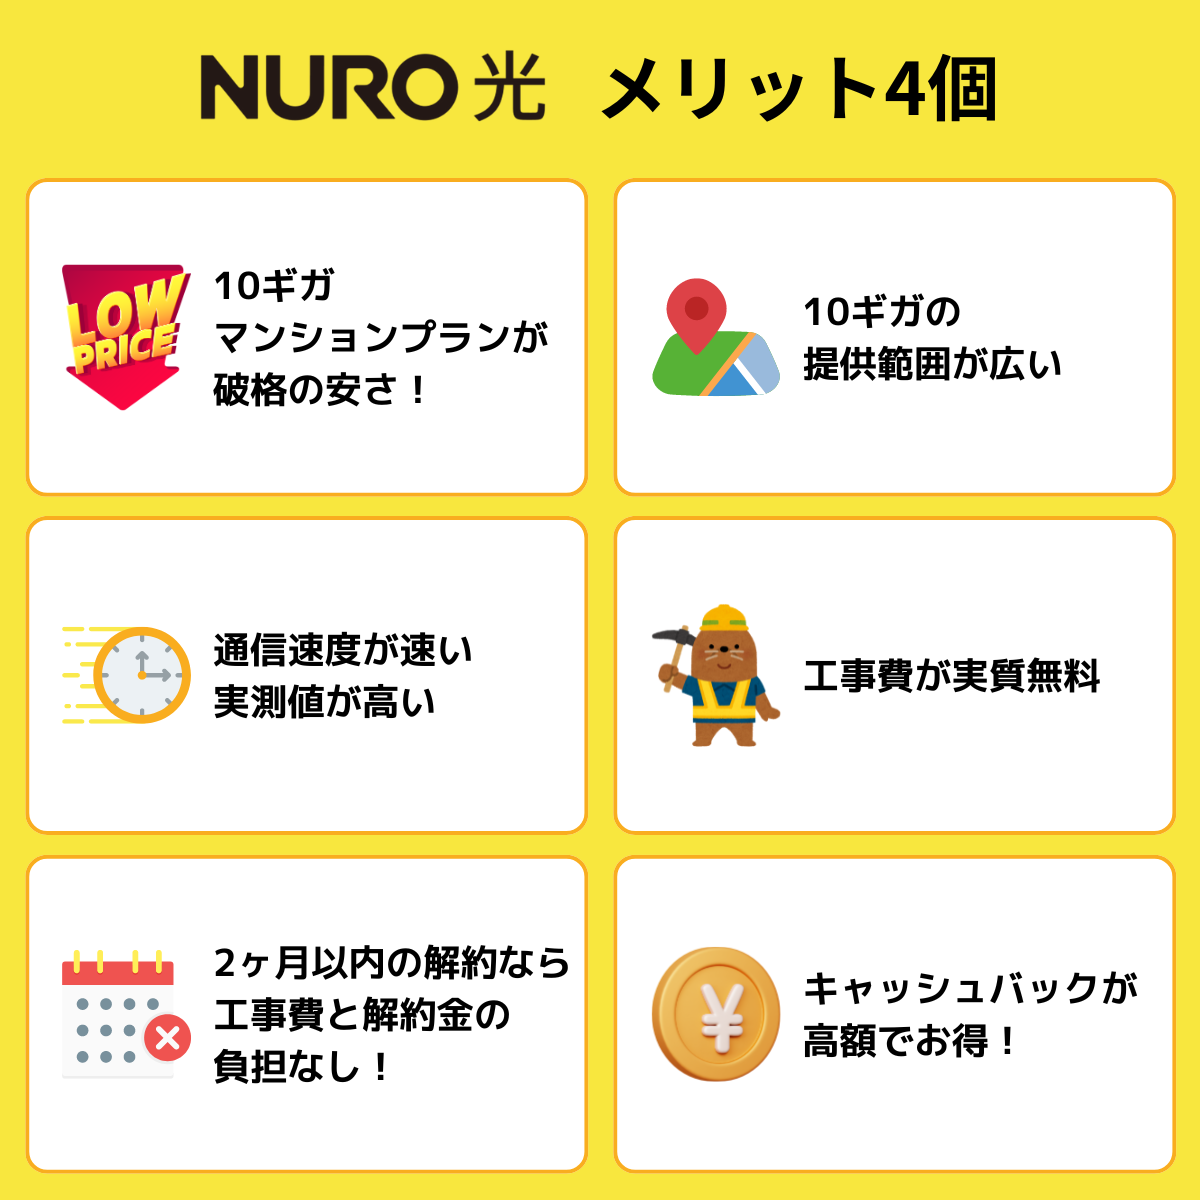 NURO光のメリット6個